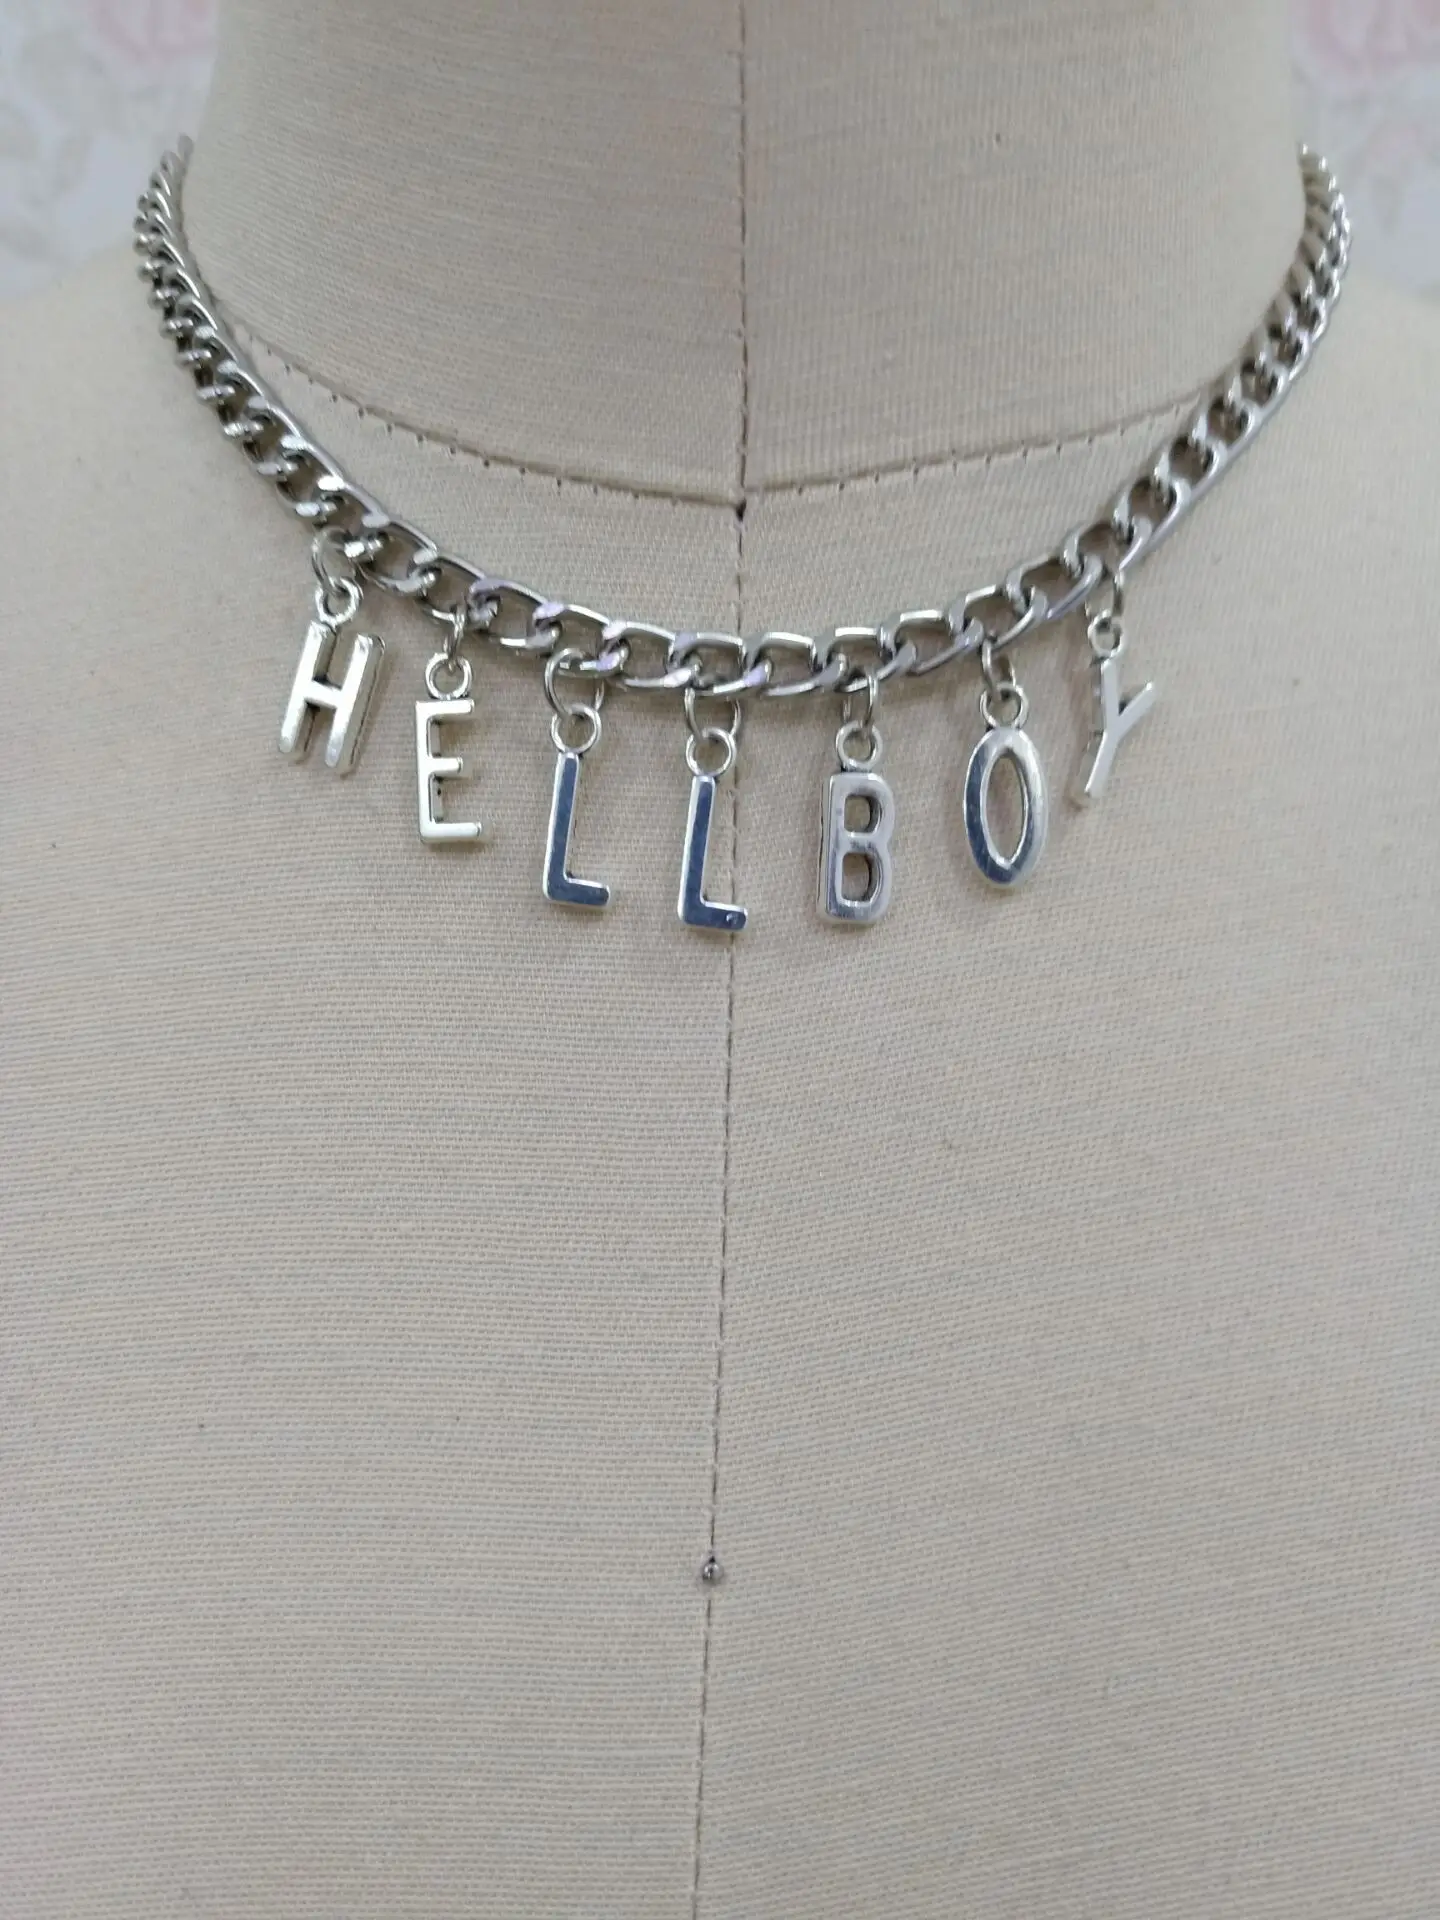 Панк письмо кулон короткое ожерелье унисекс ожерелье Харадзюку хип хоп модное ожерелье аксессуары уличная одежда CL213 - Окраска металла: SIlver